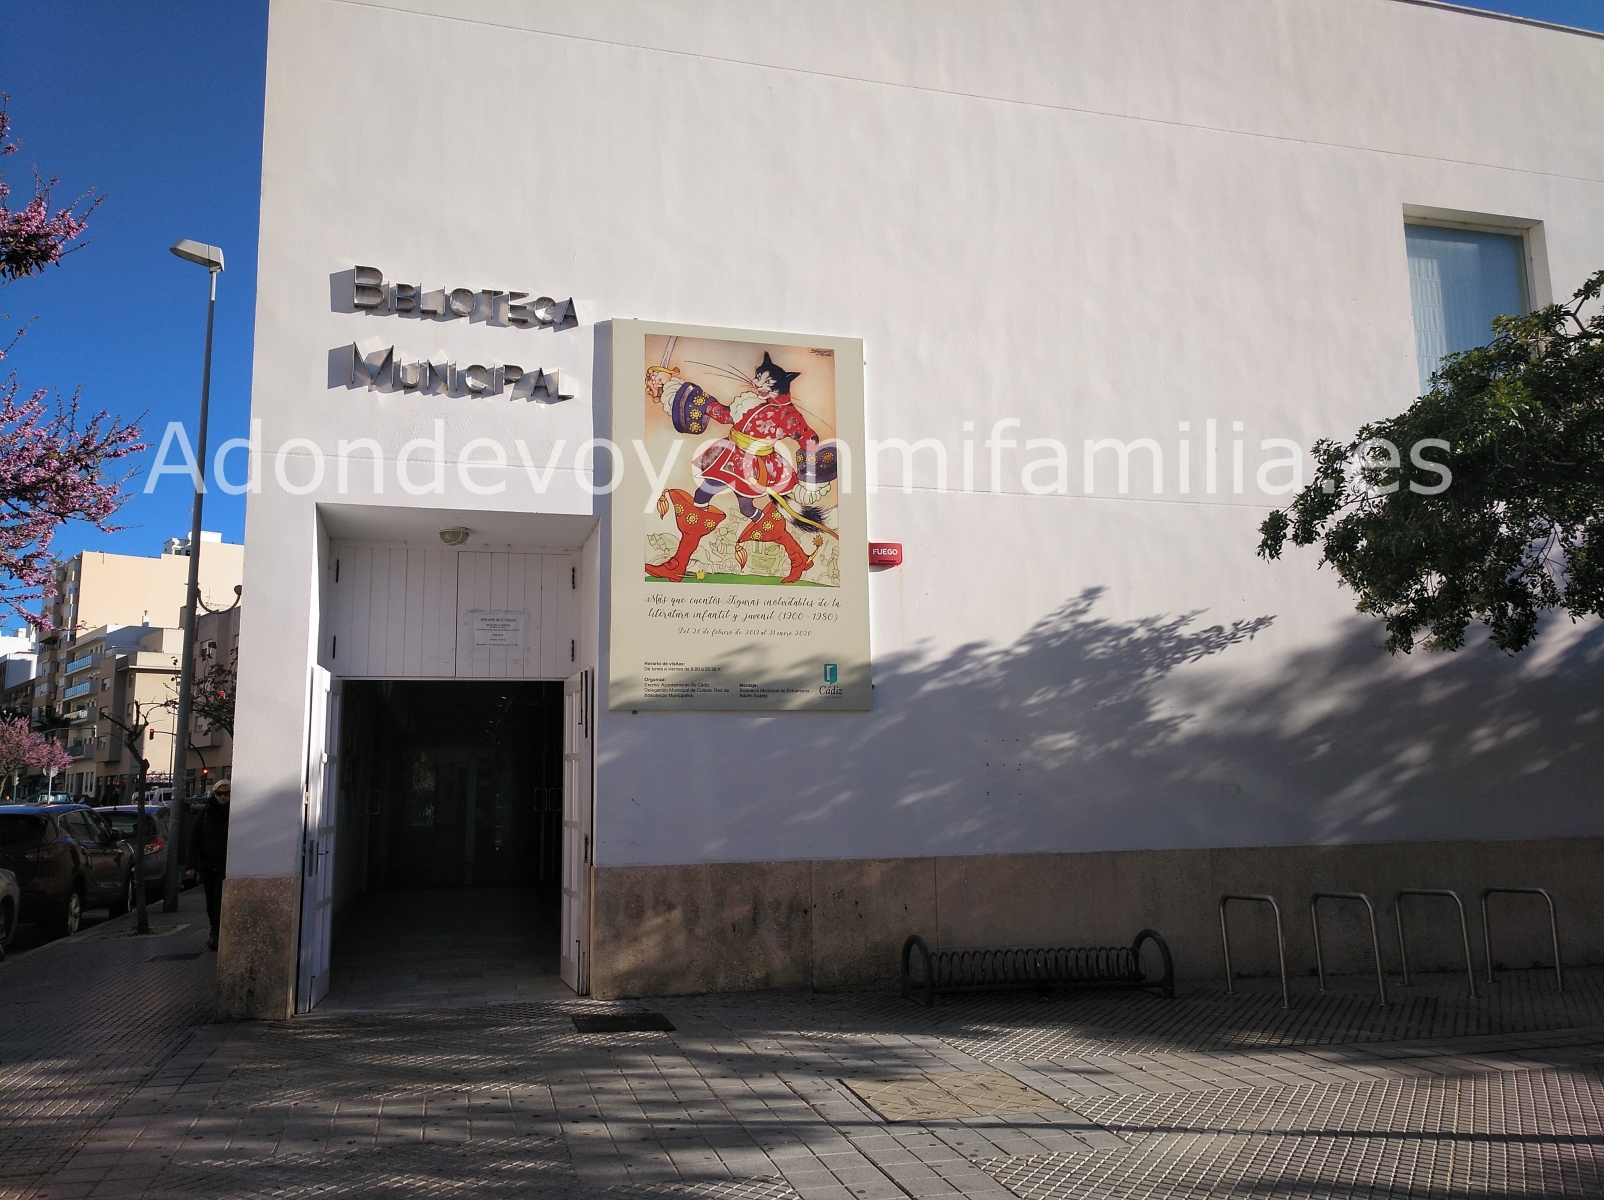 Exposicion-Biblioteca-Adolfo-Suarez-6-adondevoyconmifamilia